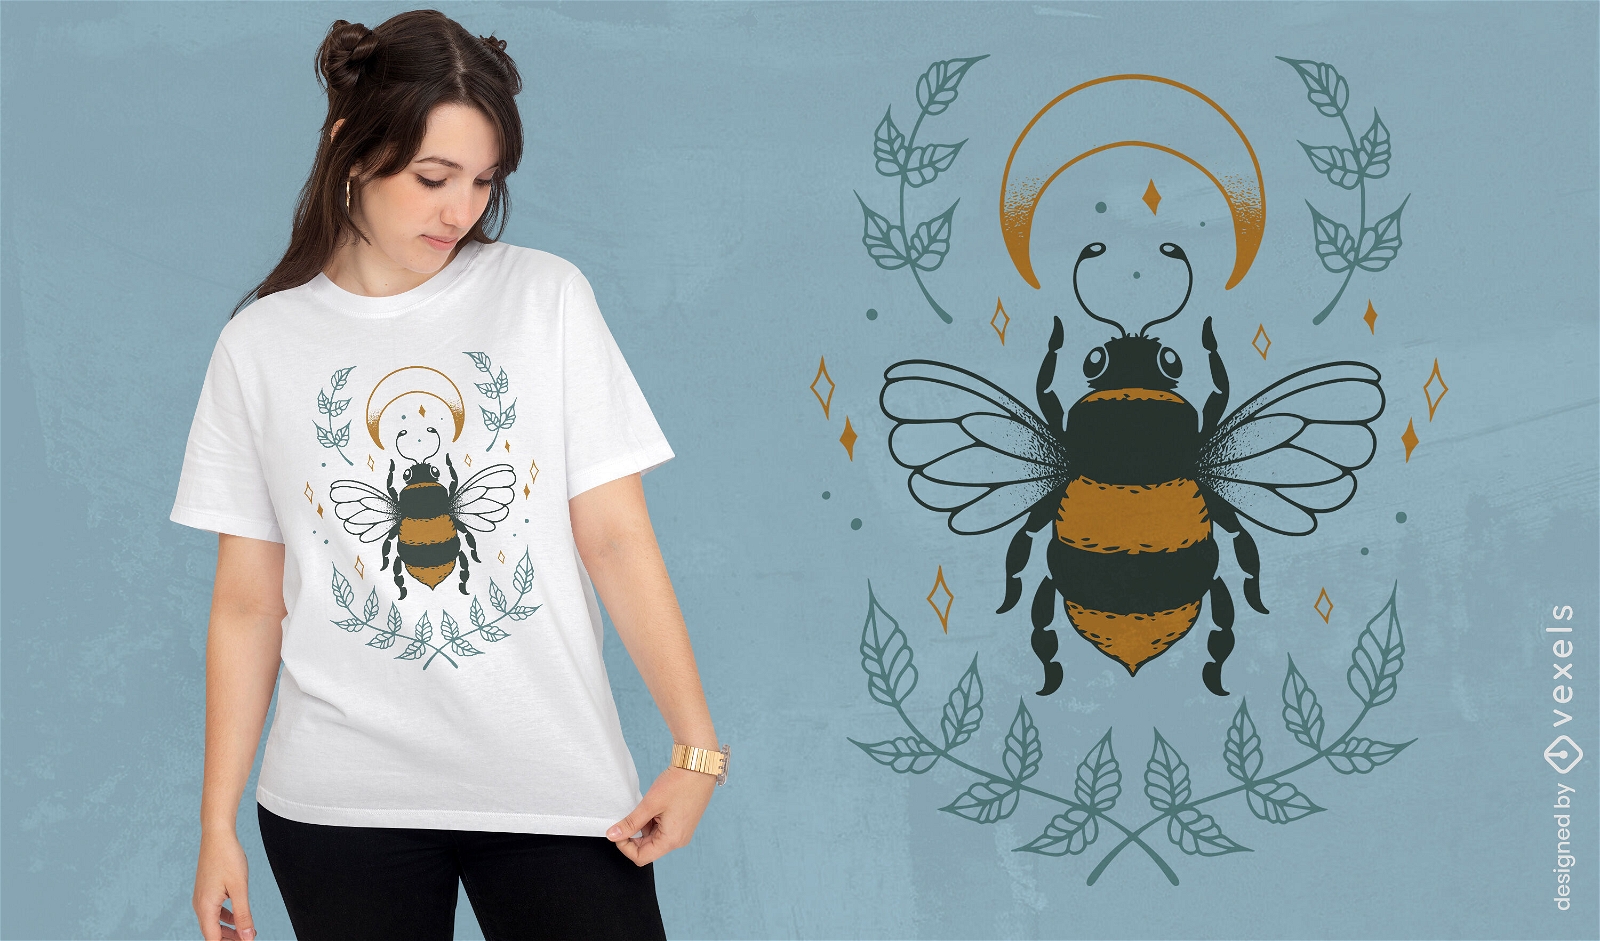 Bee animal and moon t-shirt design